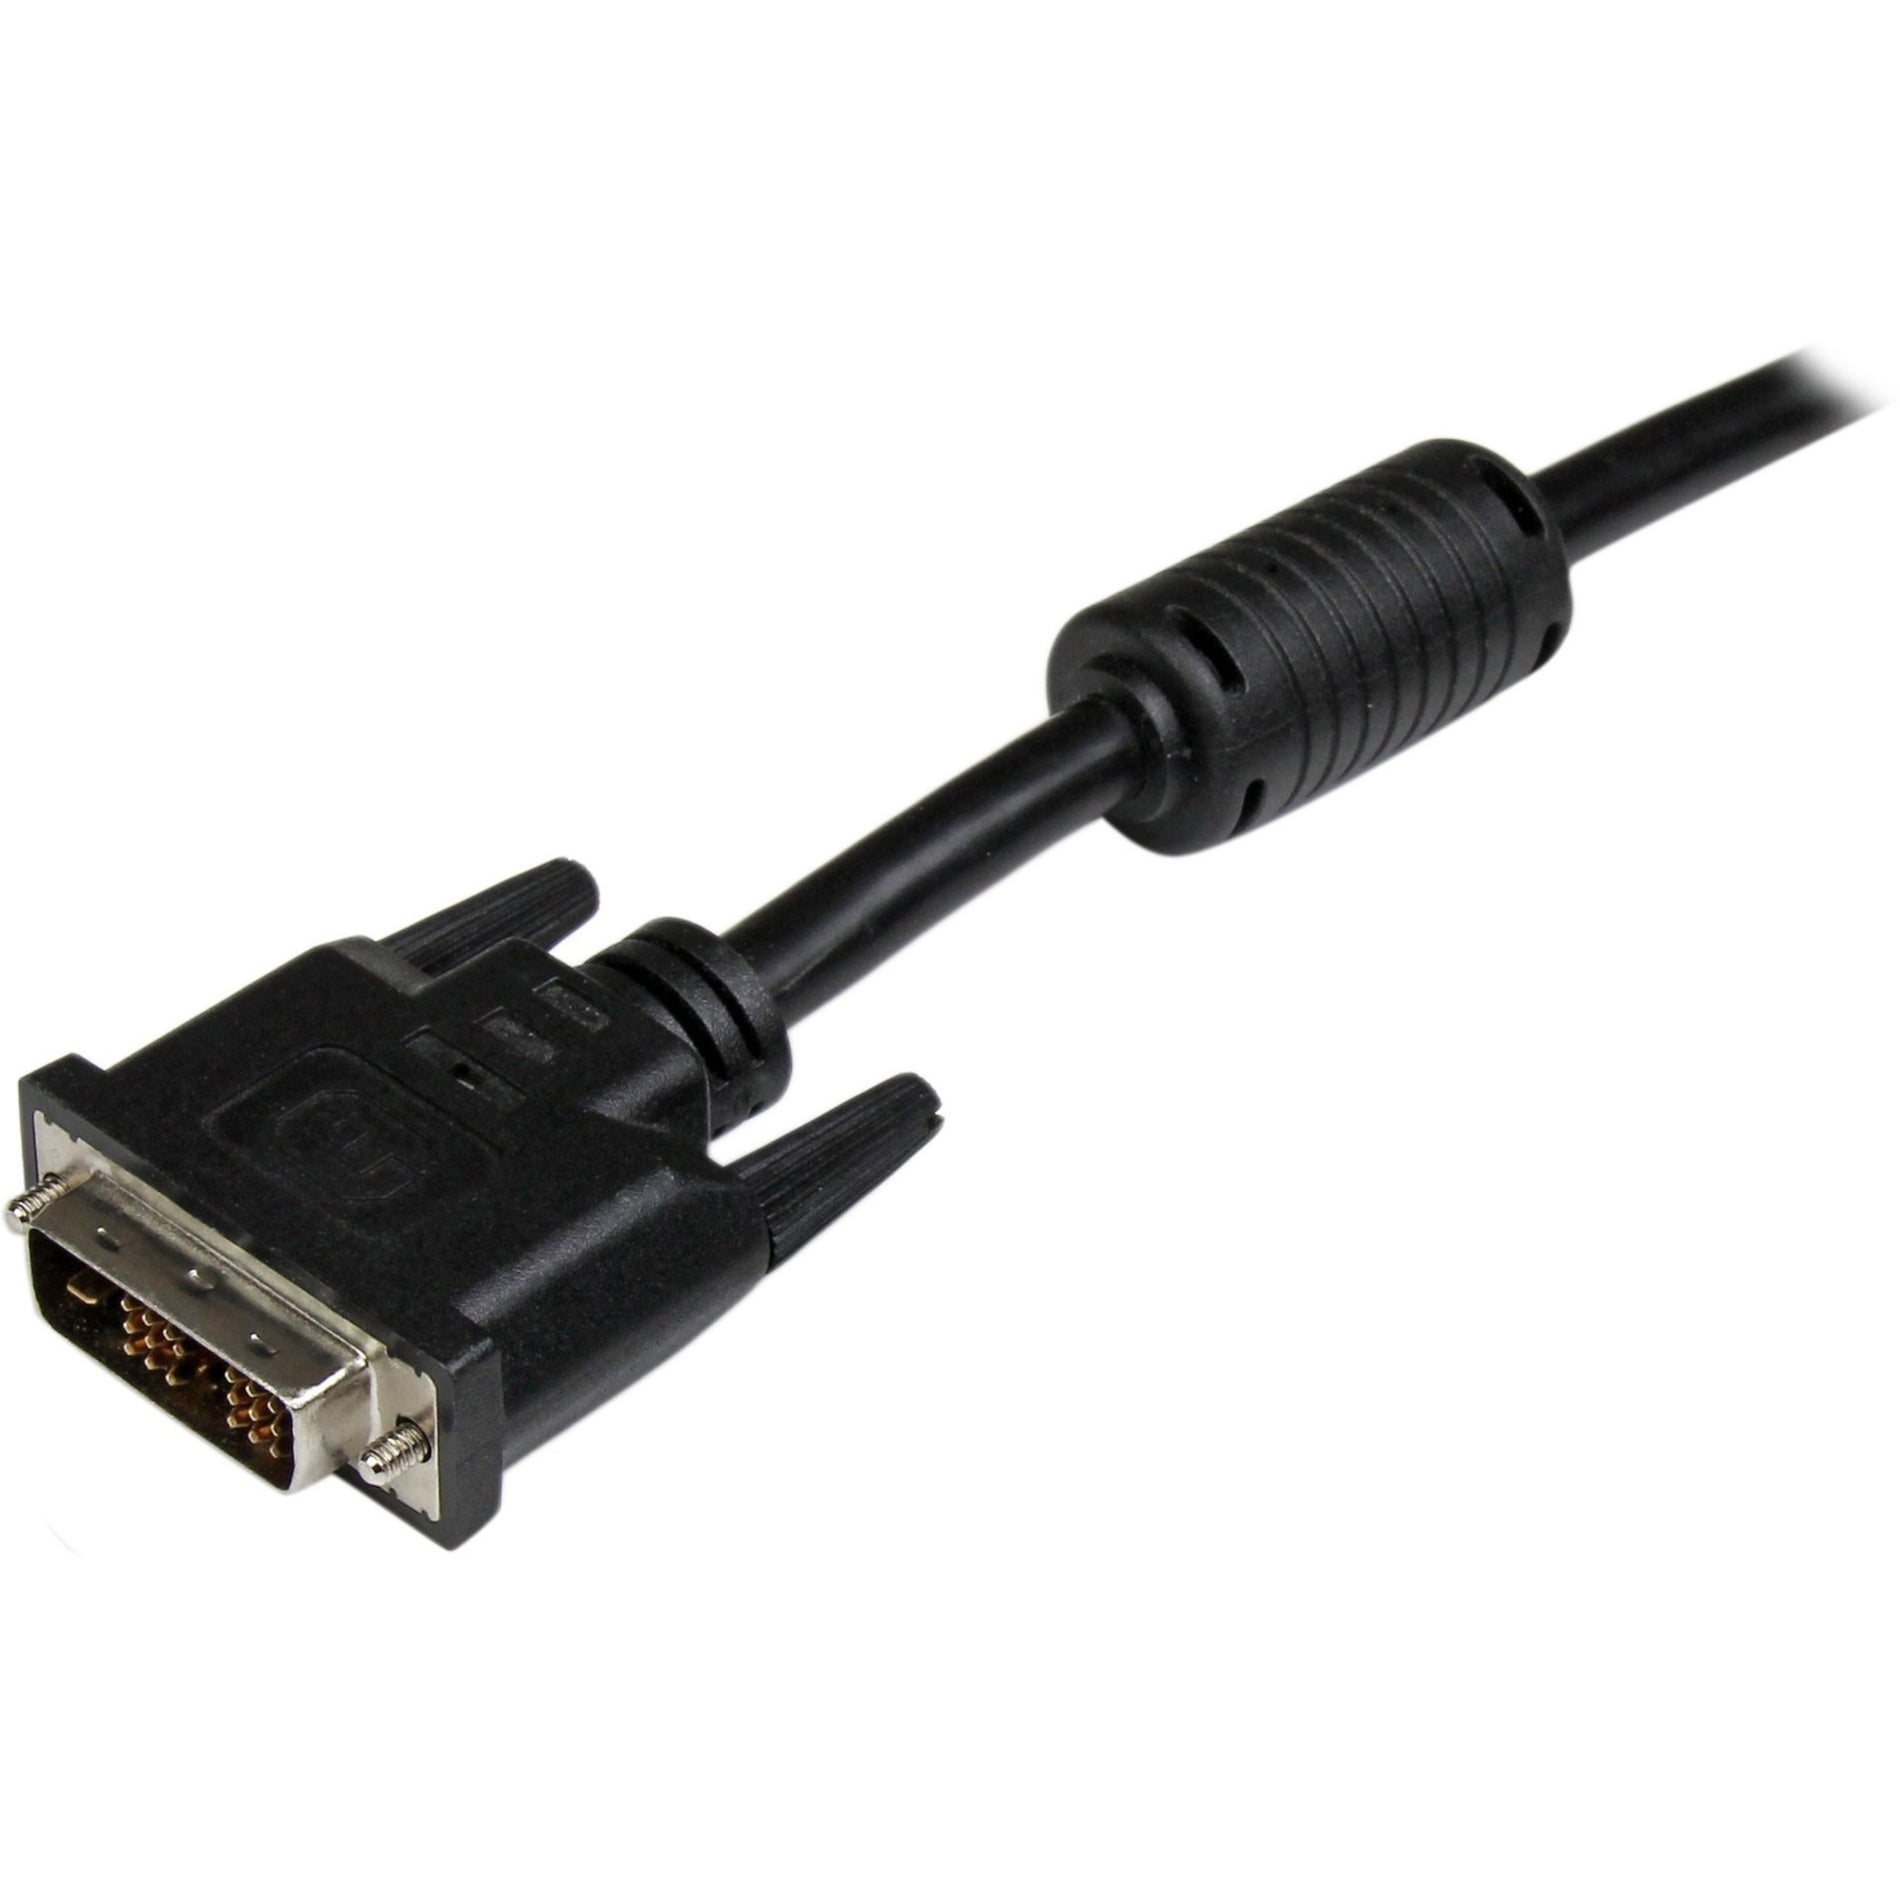 StarTech.com DVIDSMM10 10ft DVI-D Single Link Cable - M/M, EMI Protection, 5 Gbit/s Data Transfer Rate